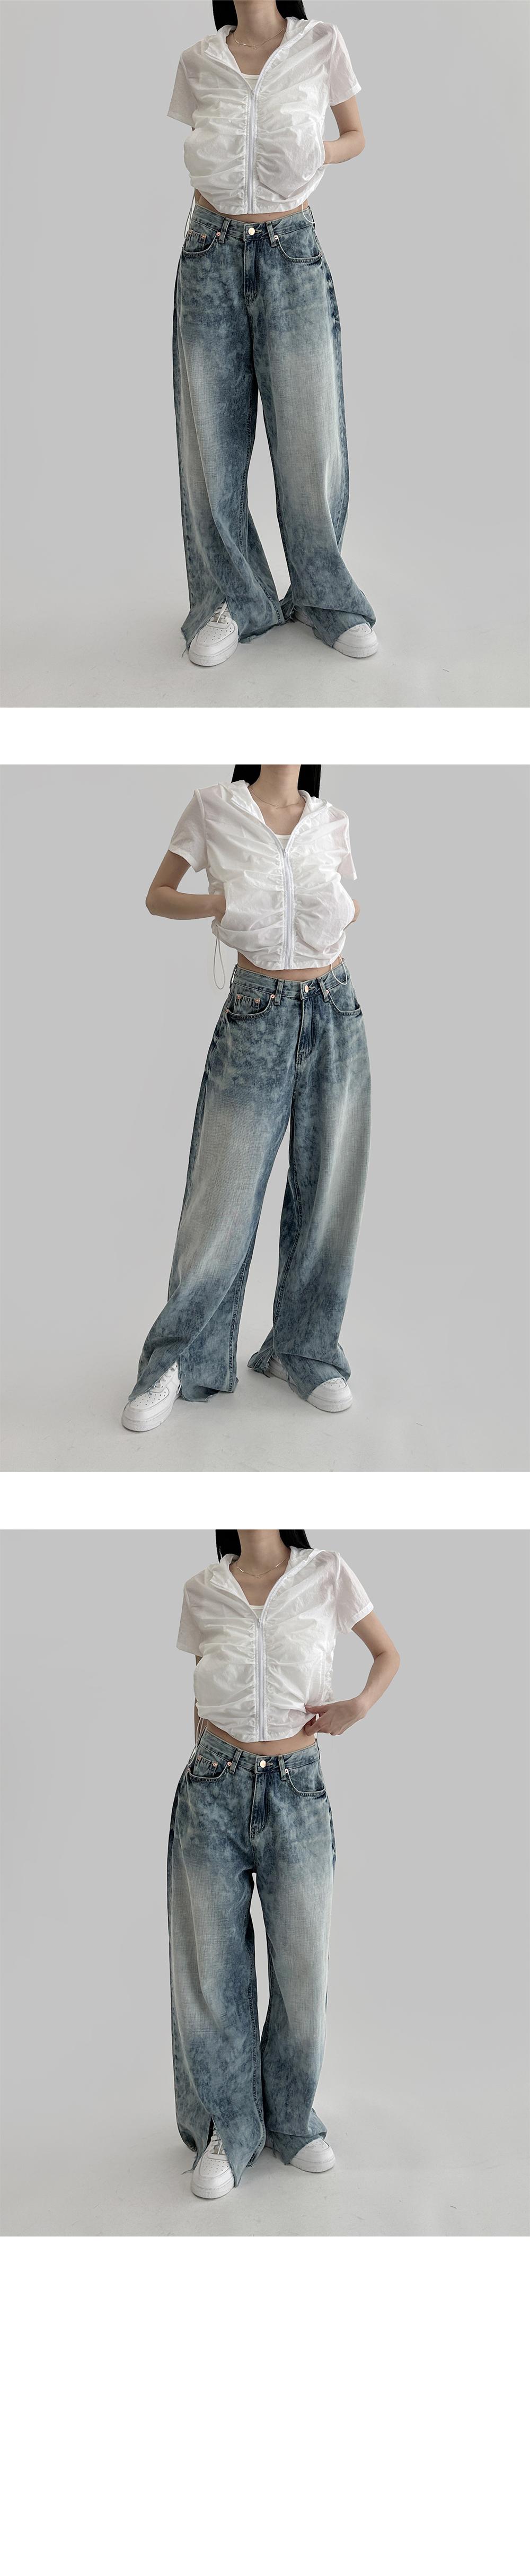 suspenders skirt/pants grey color image-S1L6